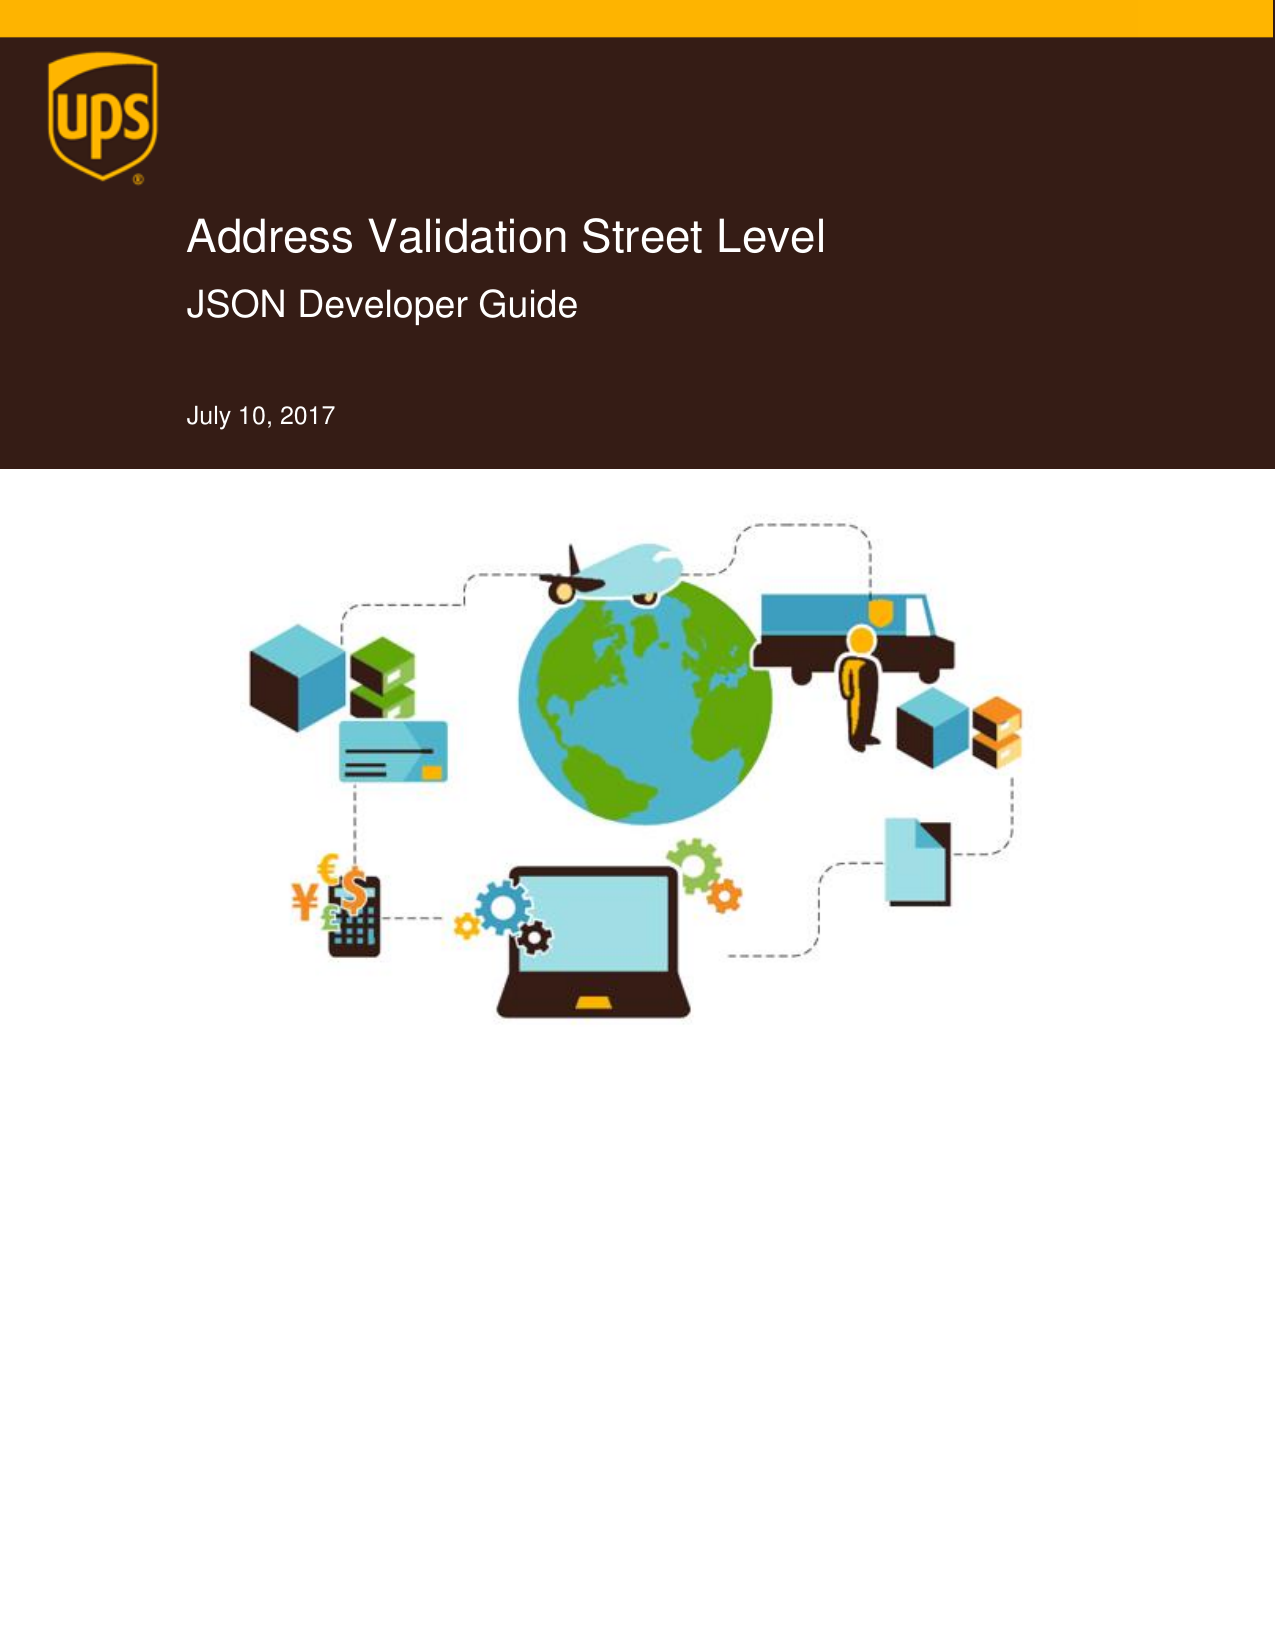 Page 1 of 9 - Address Validation Street Level JSON Developer Guide